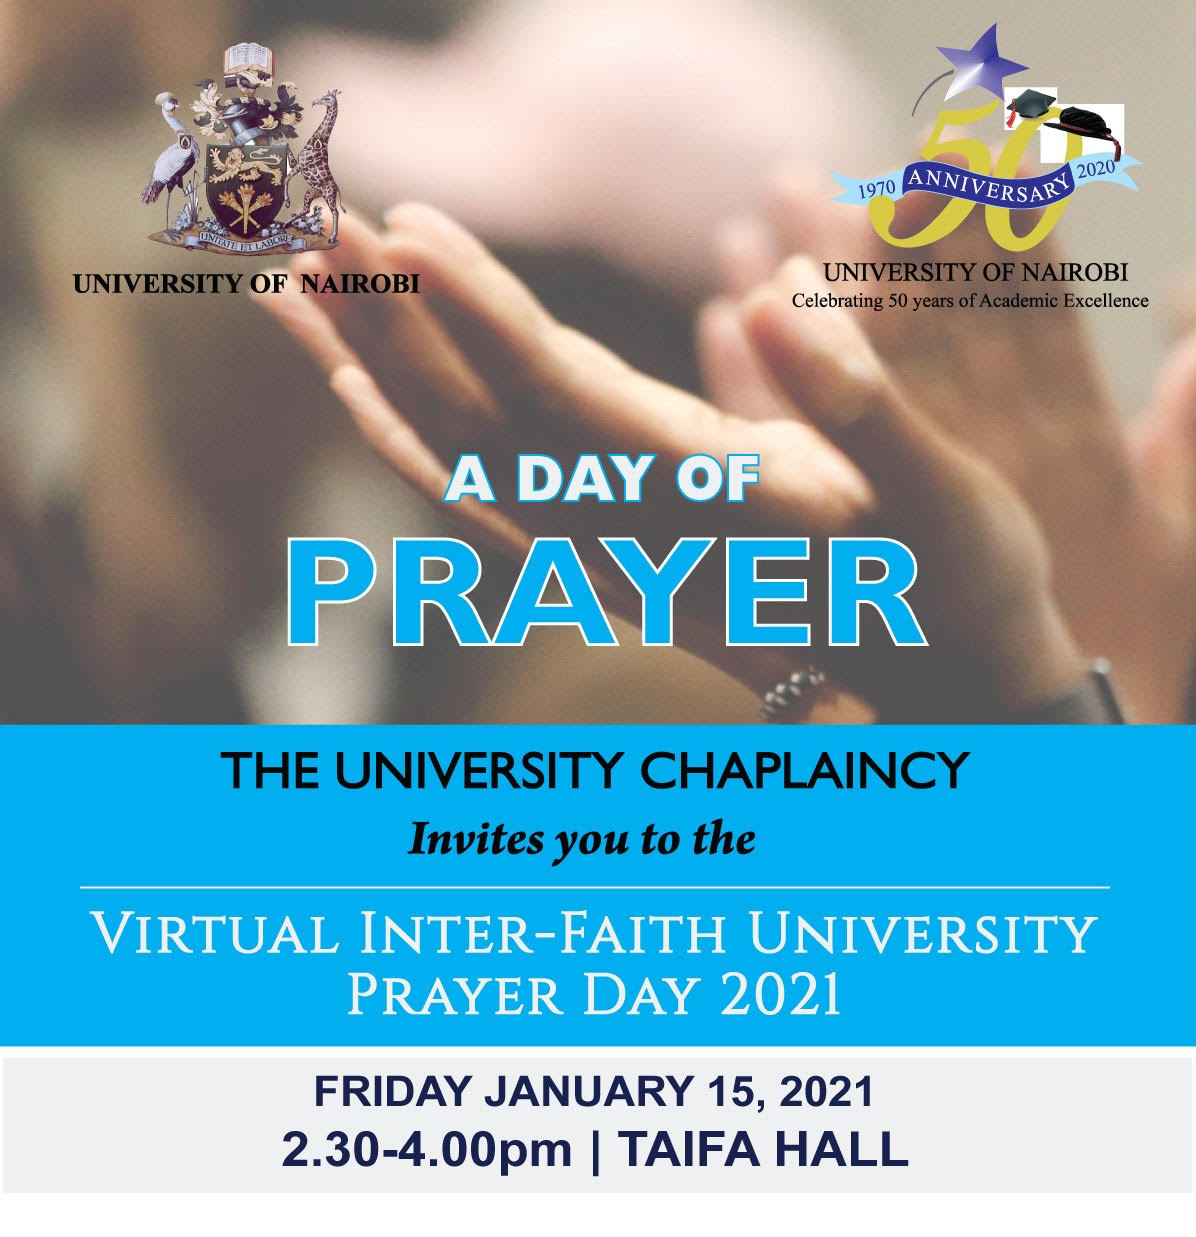 INVITATION TO THE INTER-FAITH UNIVERSITY PRAYER DAY 2021